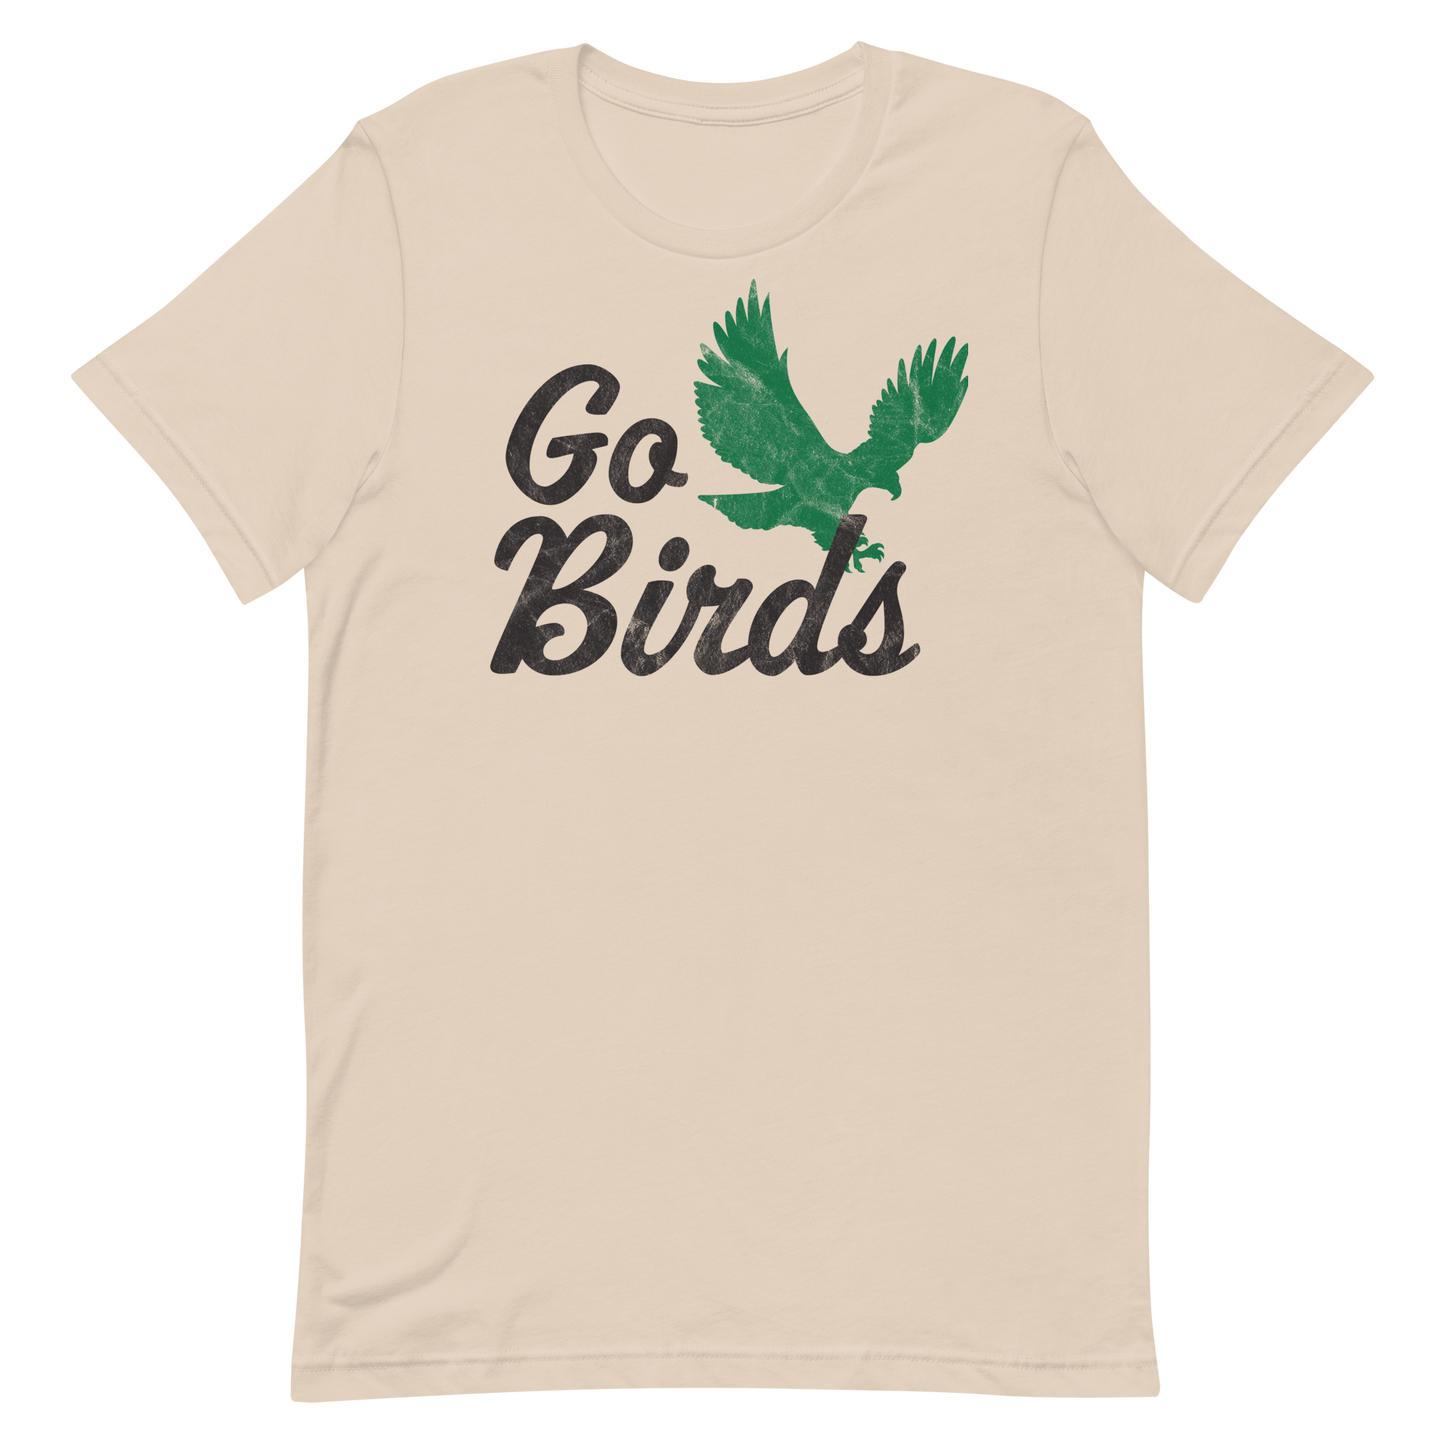 South Street Threads Go Birds Shirt White / M